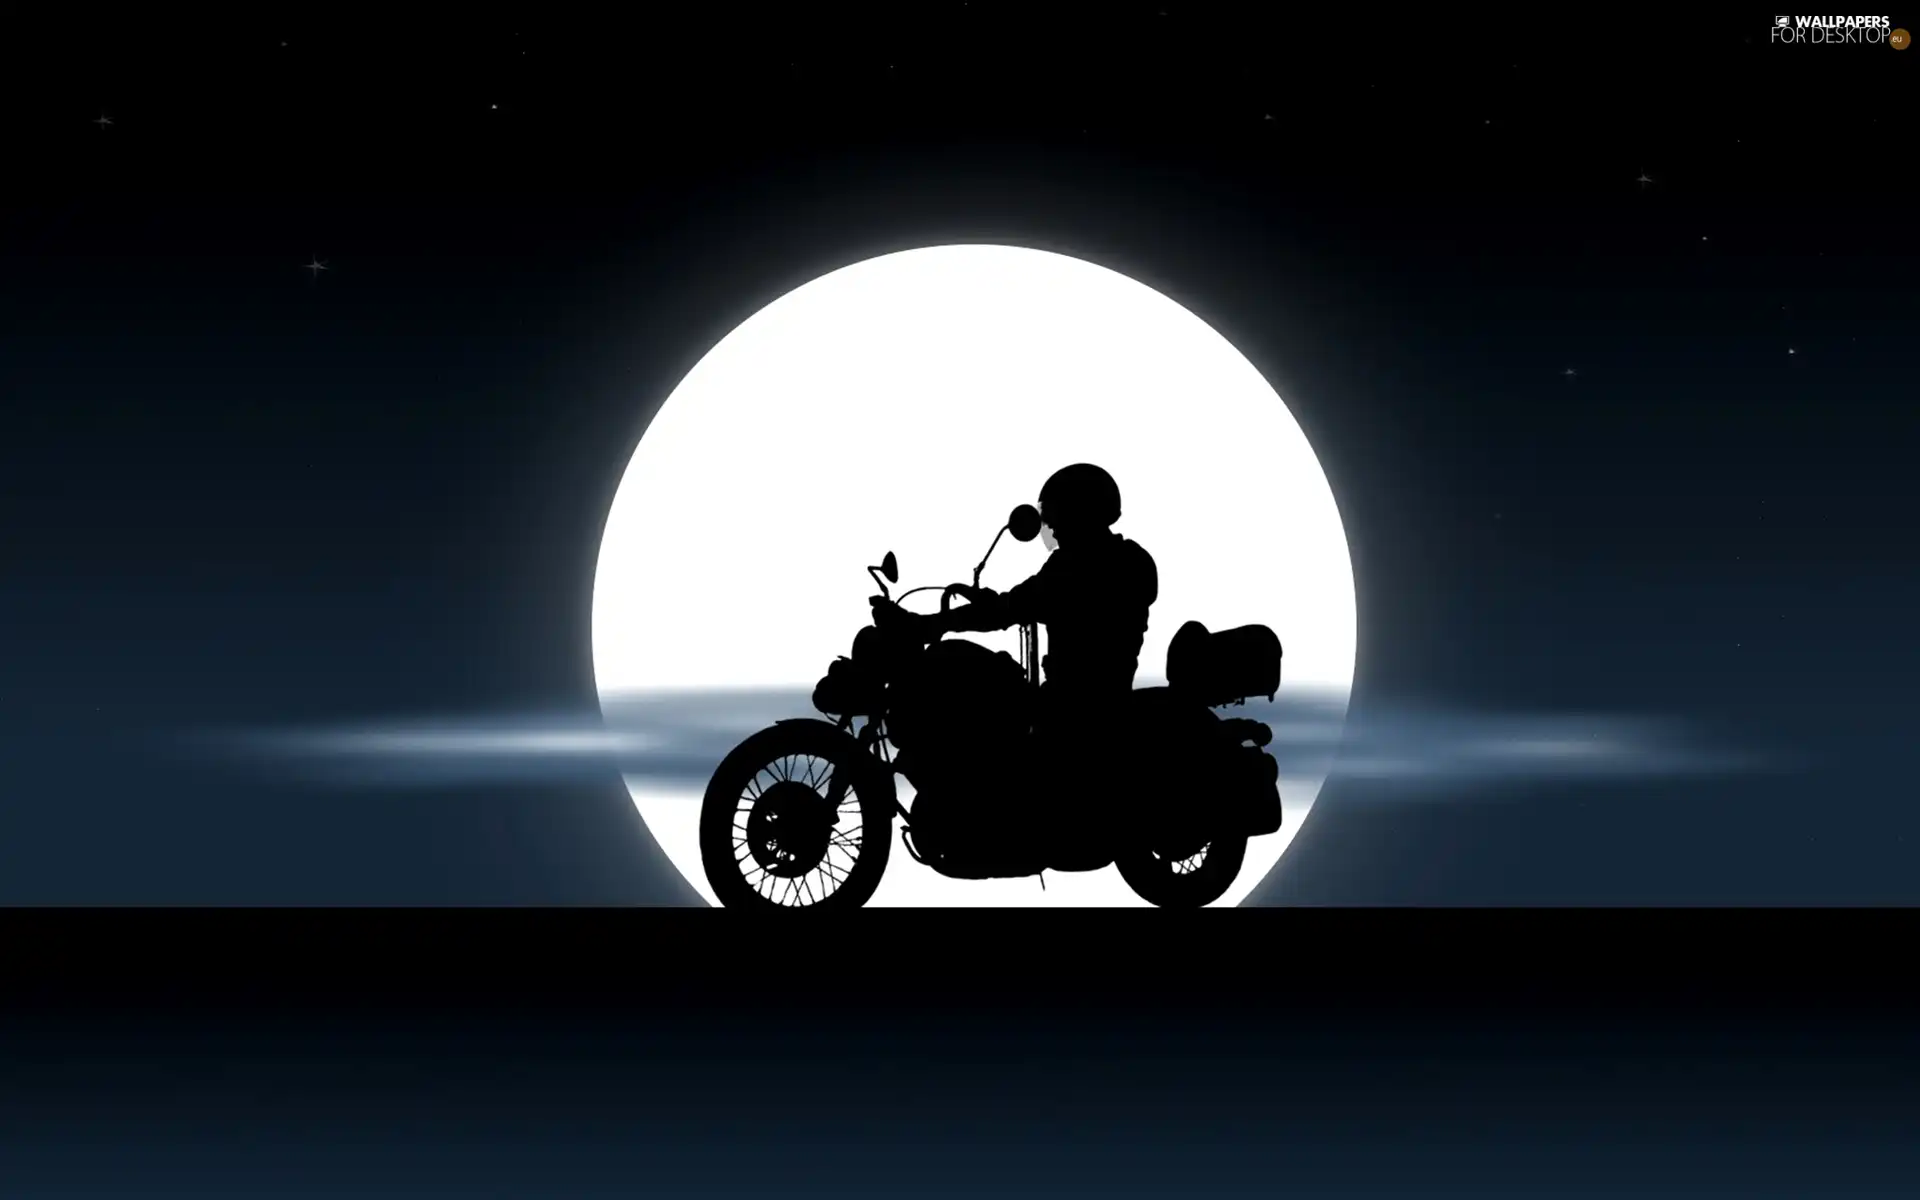 Yamaha XV535 Virago, Night, moon, Motorcyclist